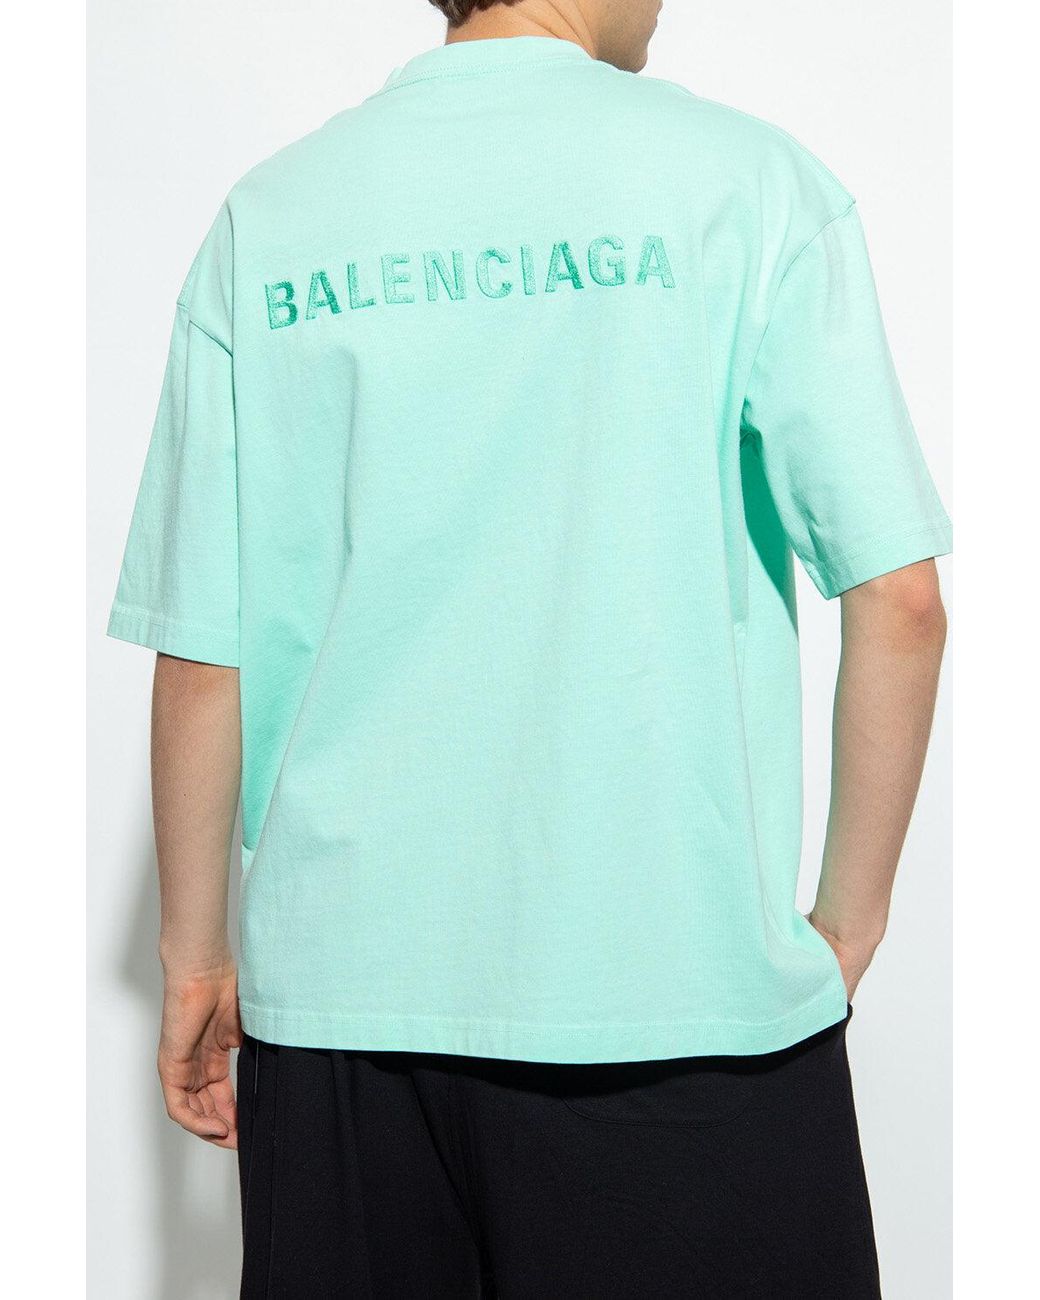 INSTOCK BALENCIAGA BB GREEN INK SHIRT in size M Mens Fashion Tops   Sets Tshirts  Polo Shirts on Carousell